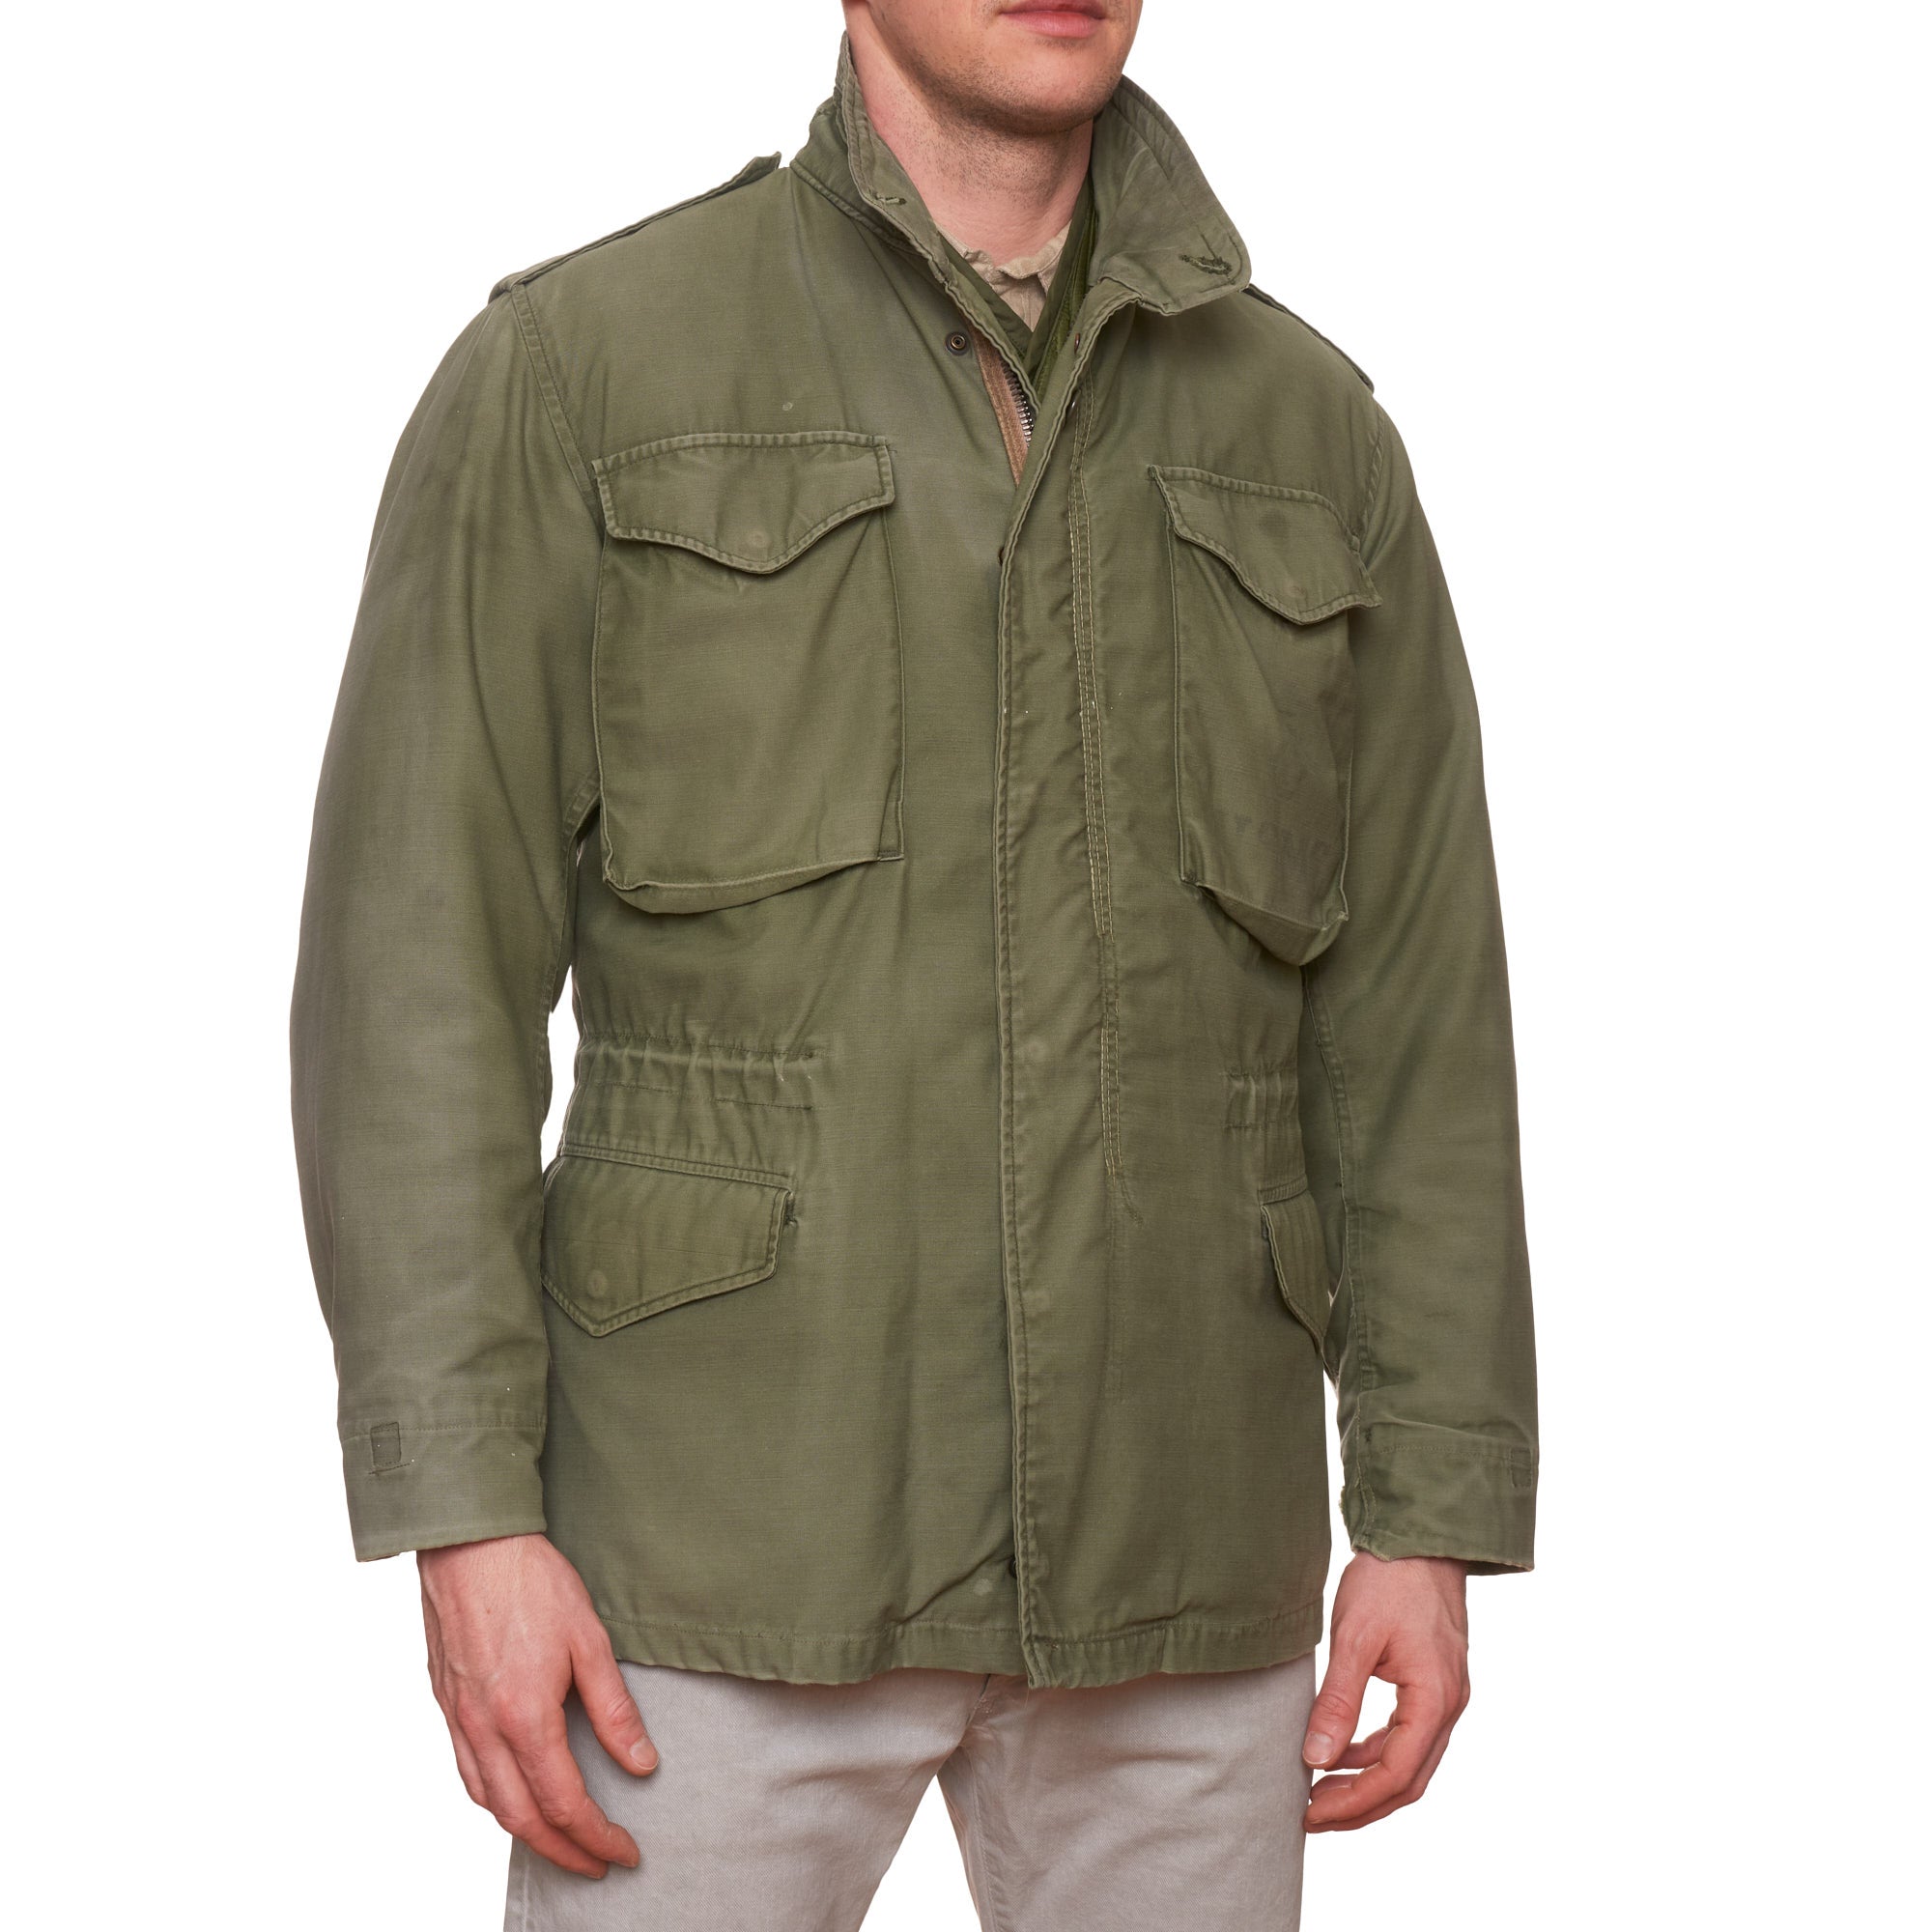 US Army Vintage Field Jacket